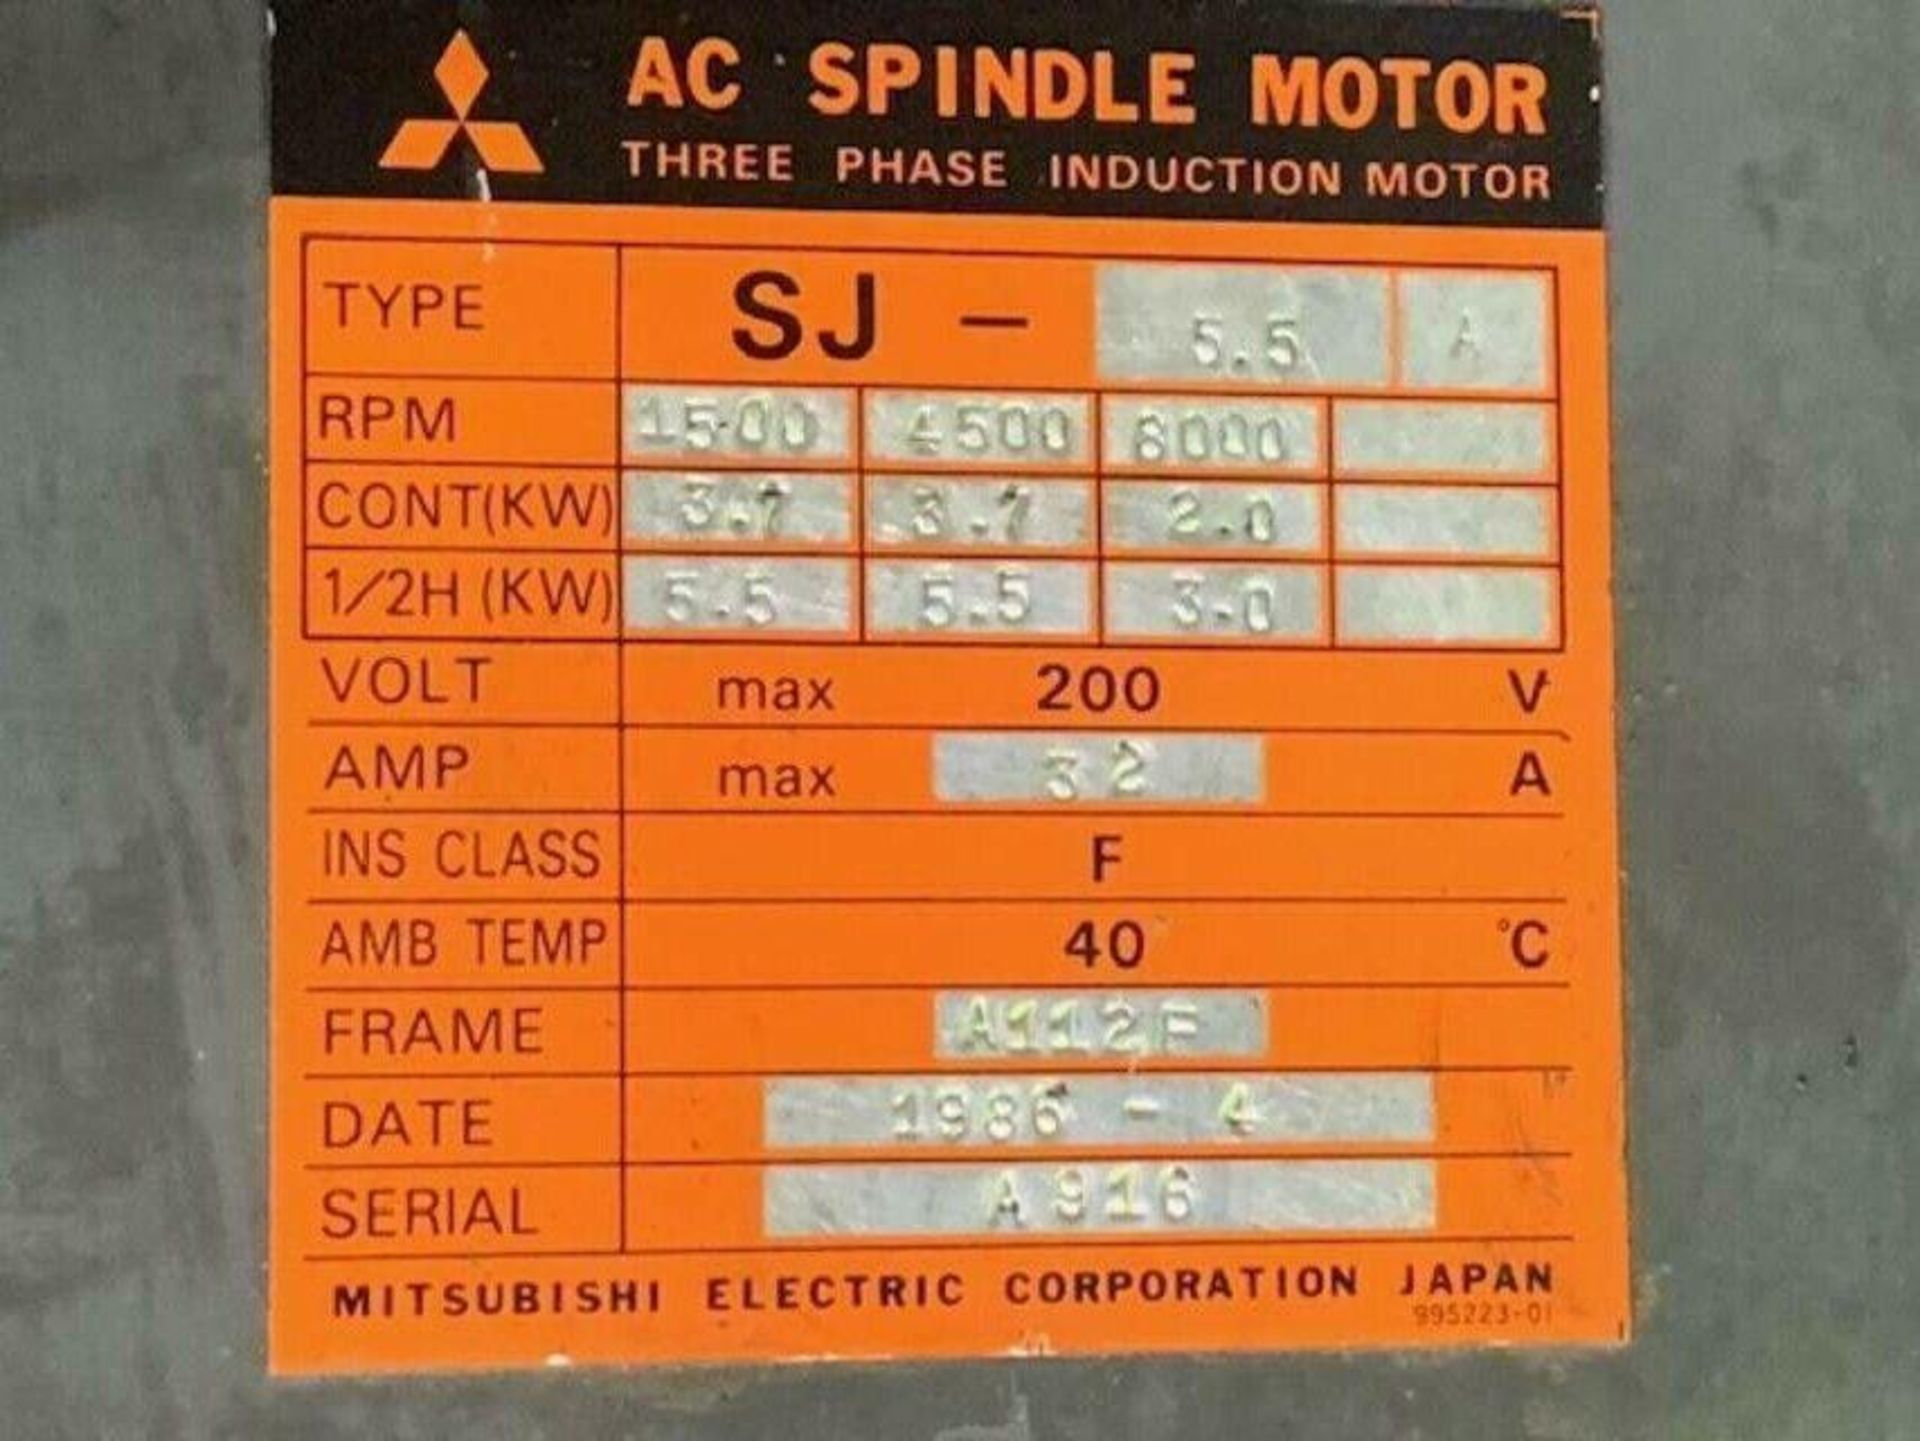 Mitsubishi AC Spindle Drive Motor, SJ-5.5 A, 3.7/5.5 kW, 200V - Image 5 of 5